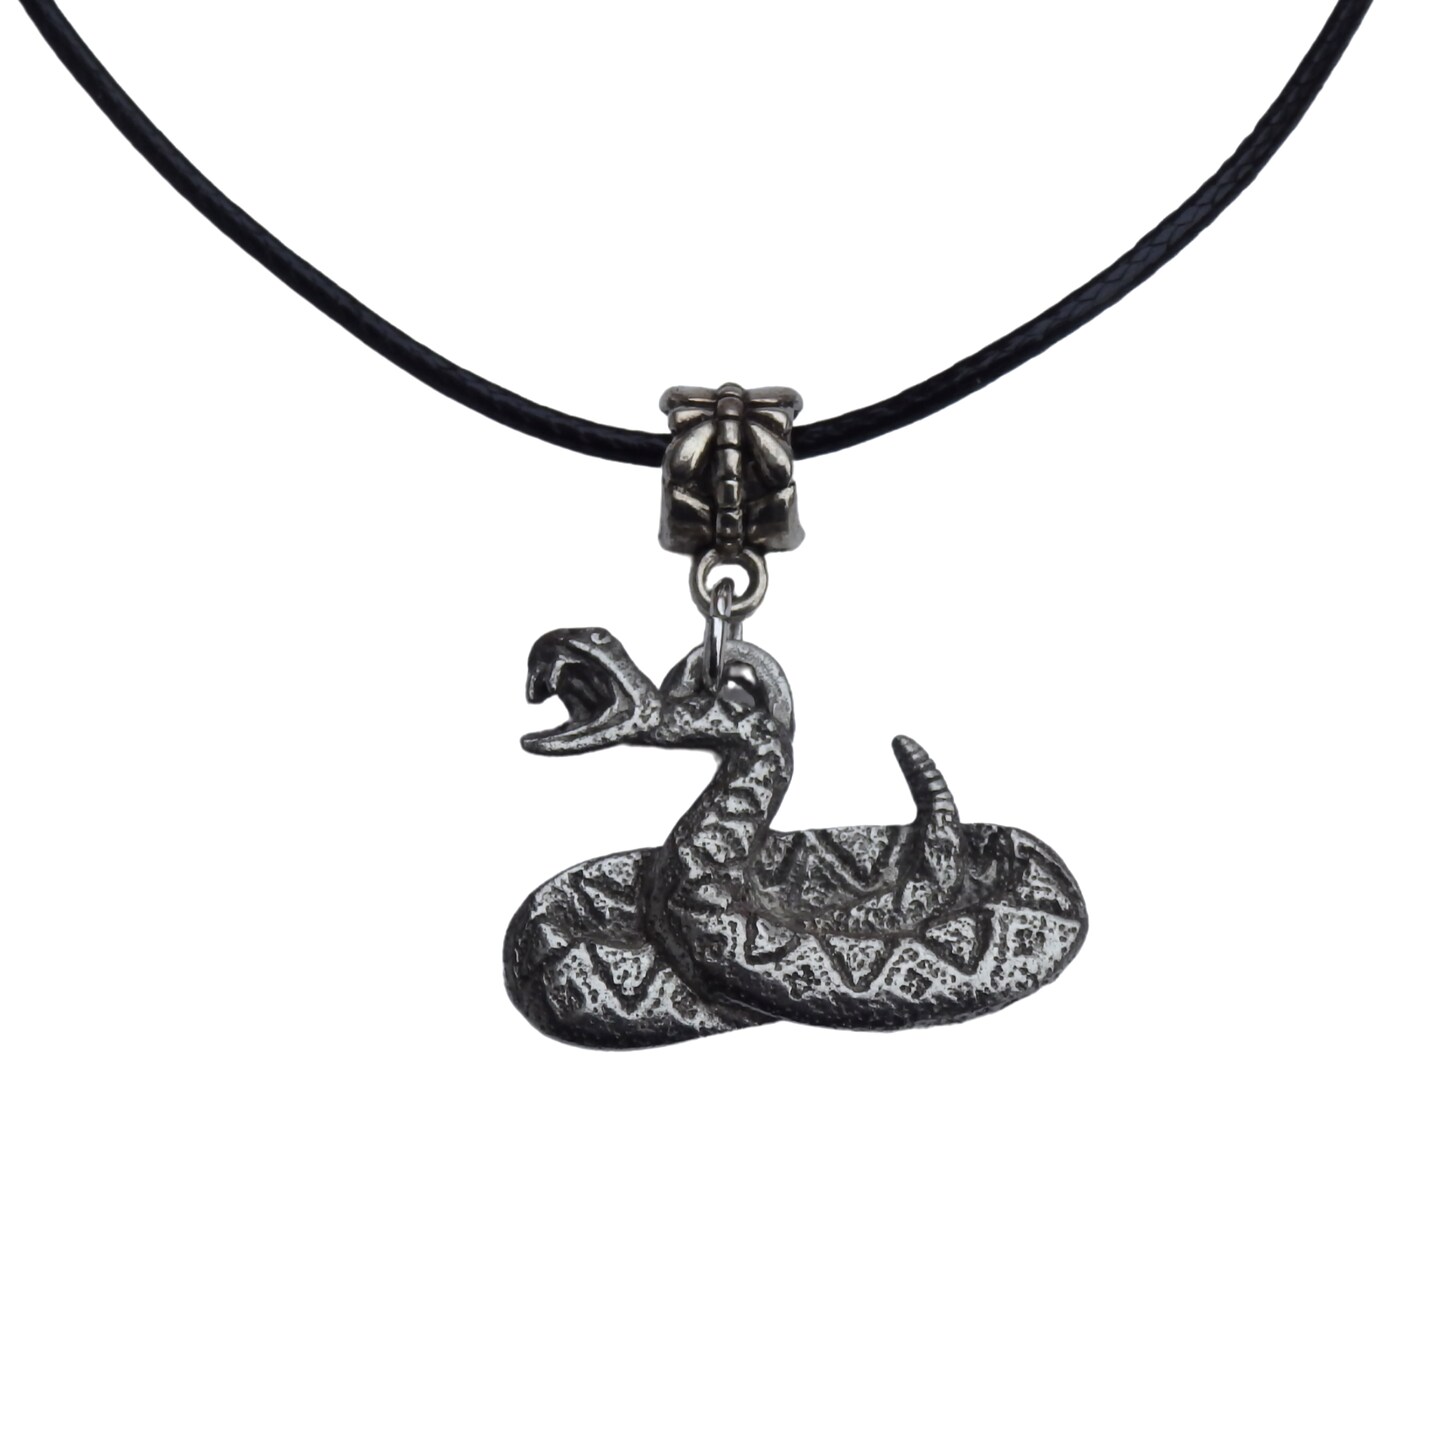 rattlesnake rattle necklace | Genuine rattlesnake rattle and… | Flickr